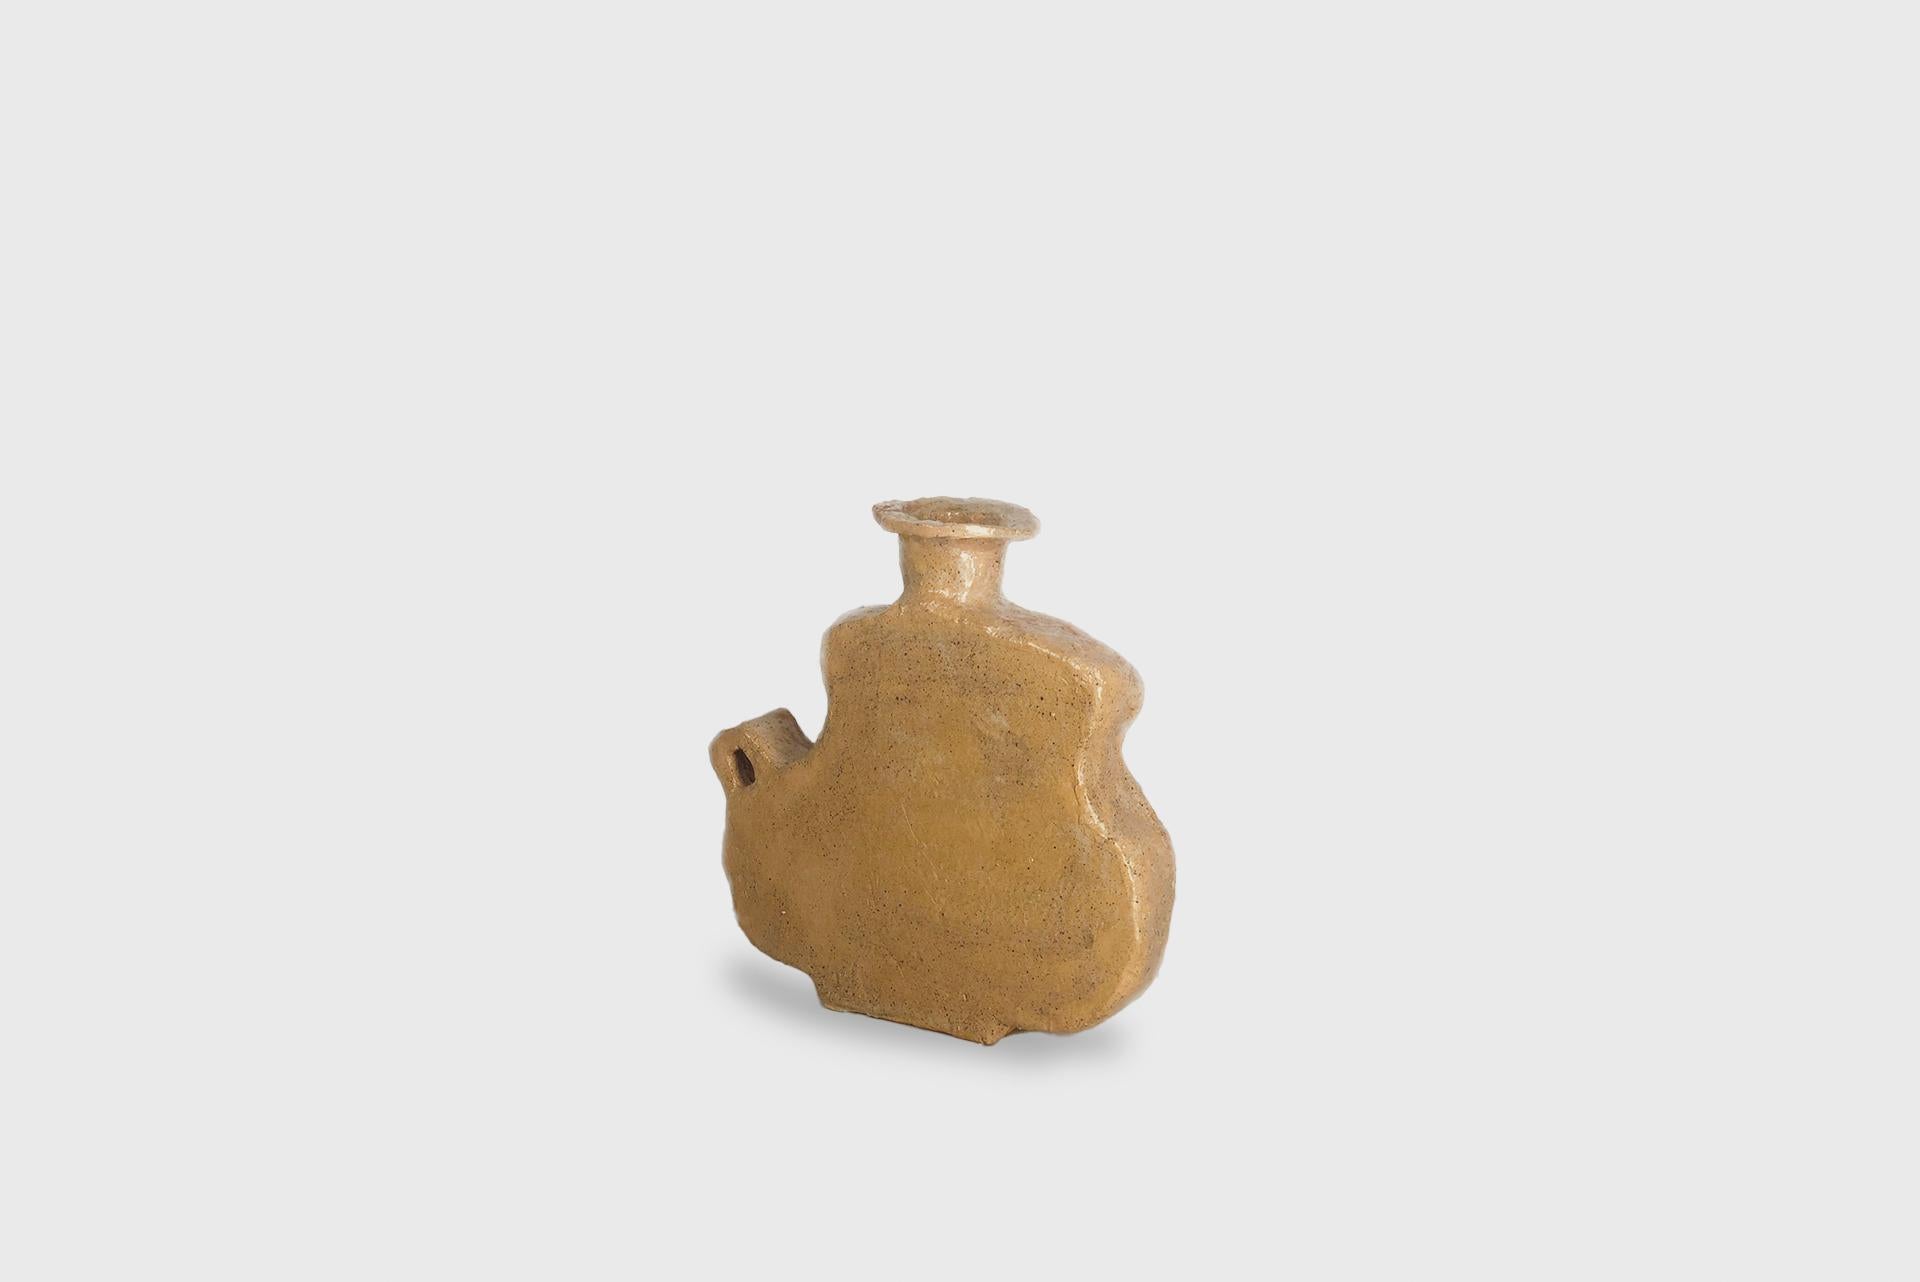 Ceramic vase model “Atro”
From the series 